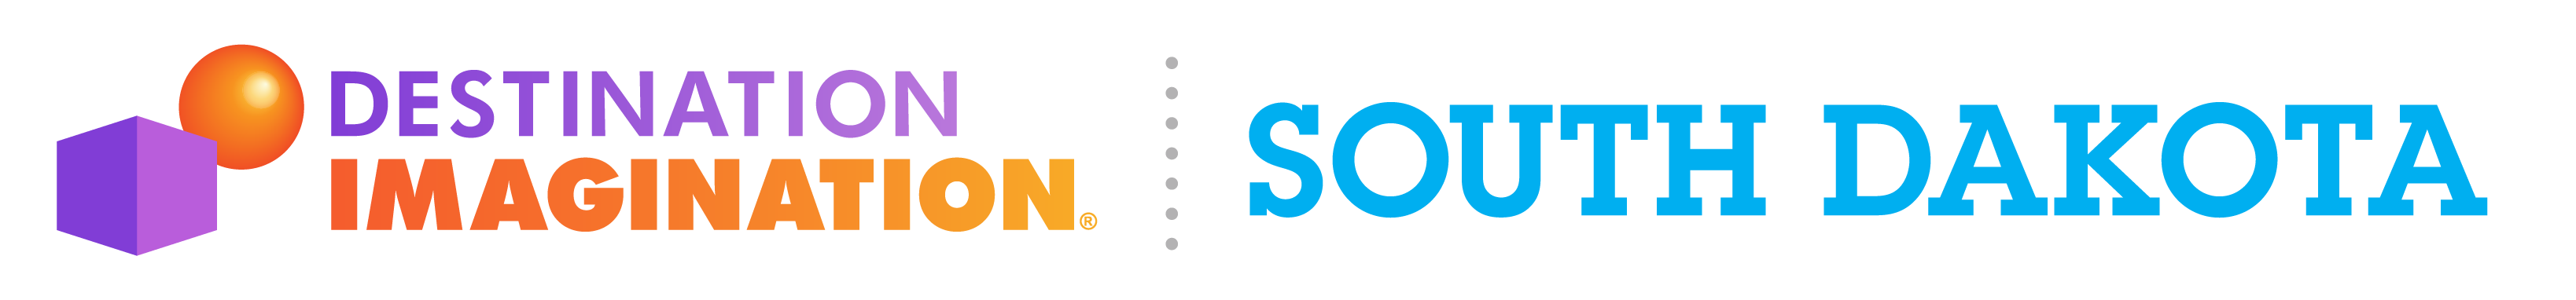 travel south dakota logo